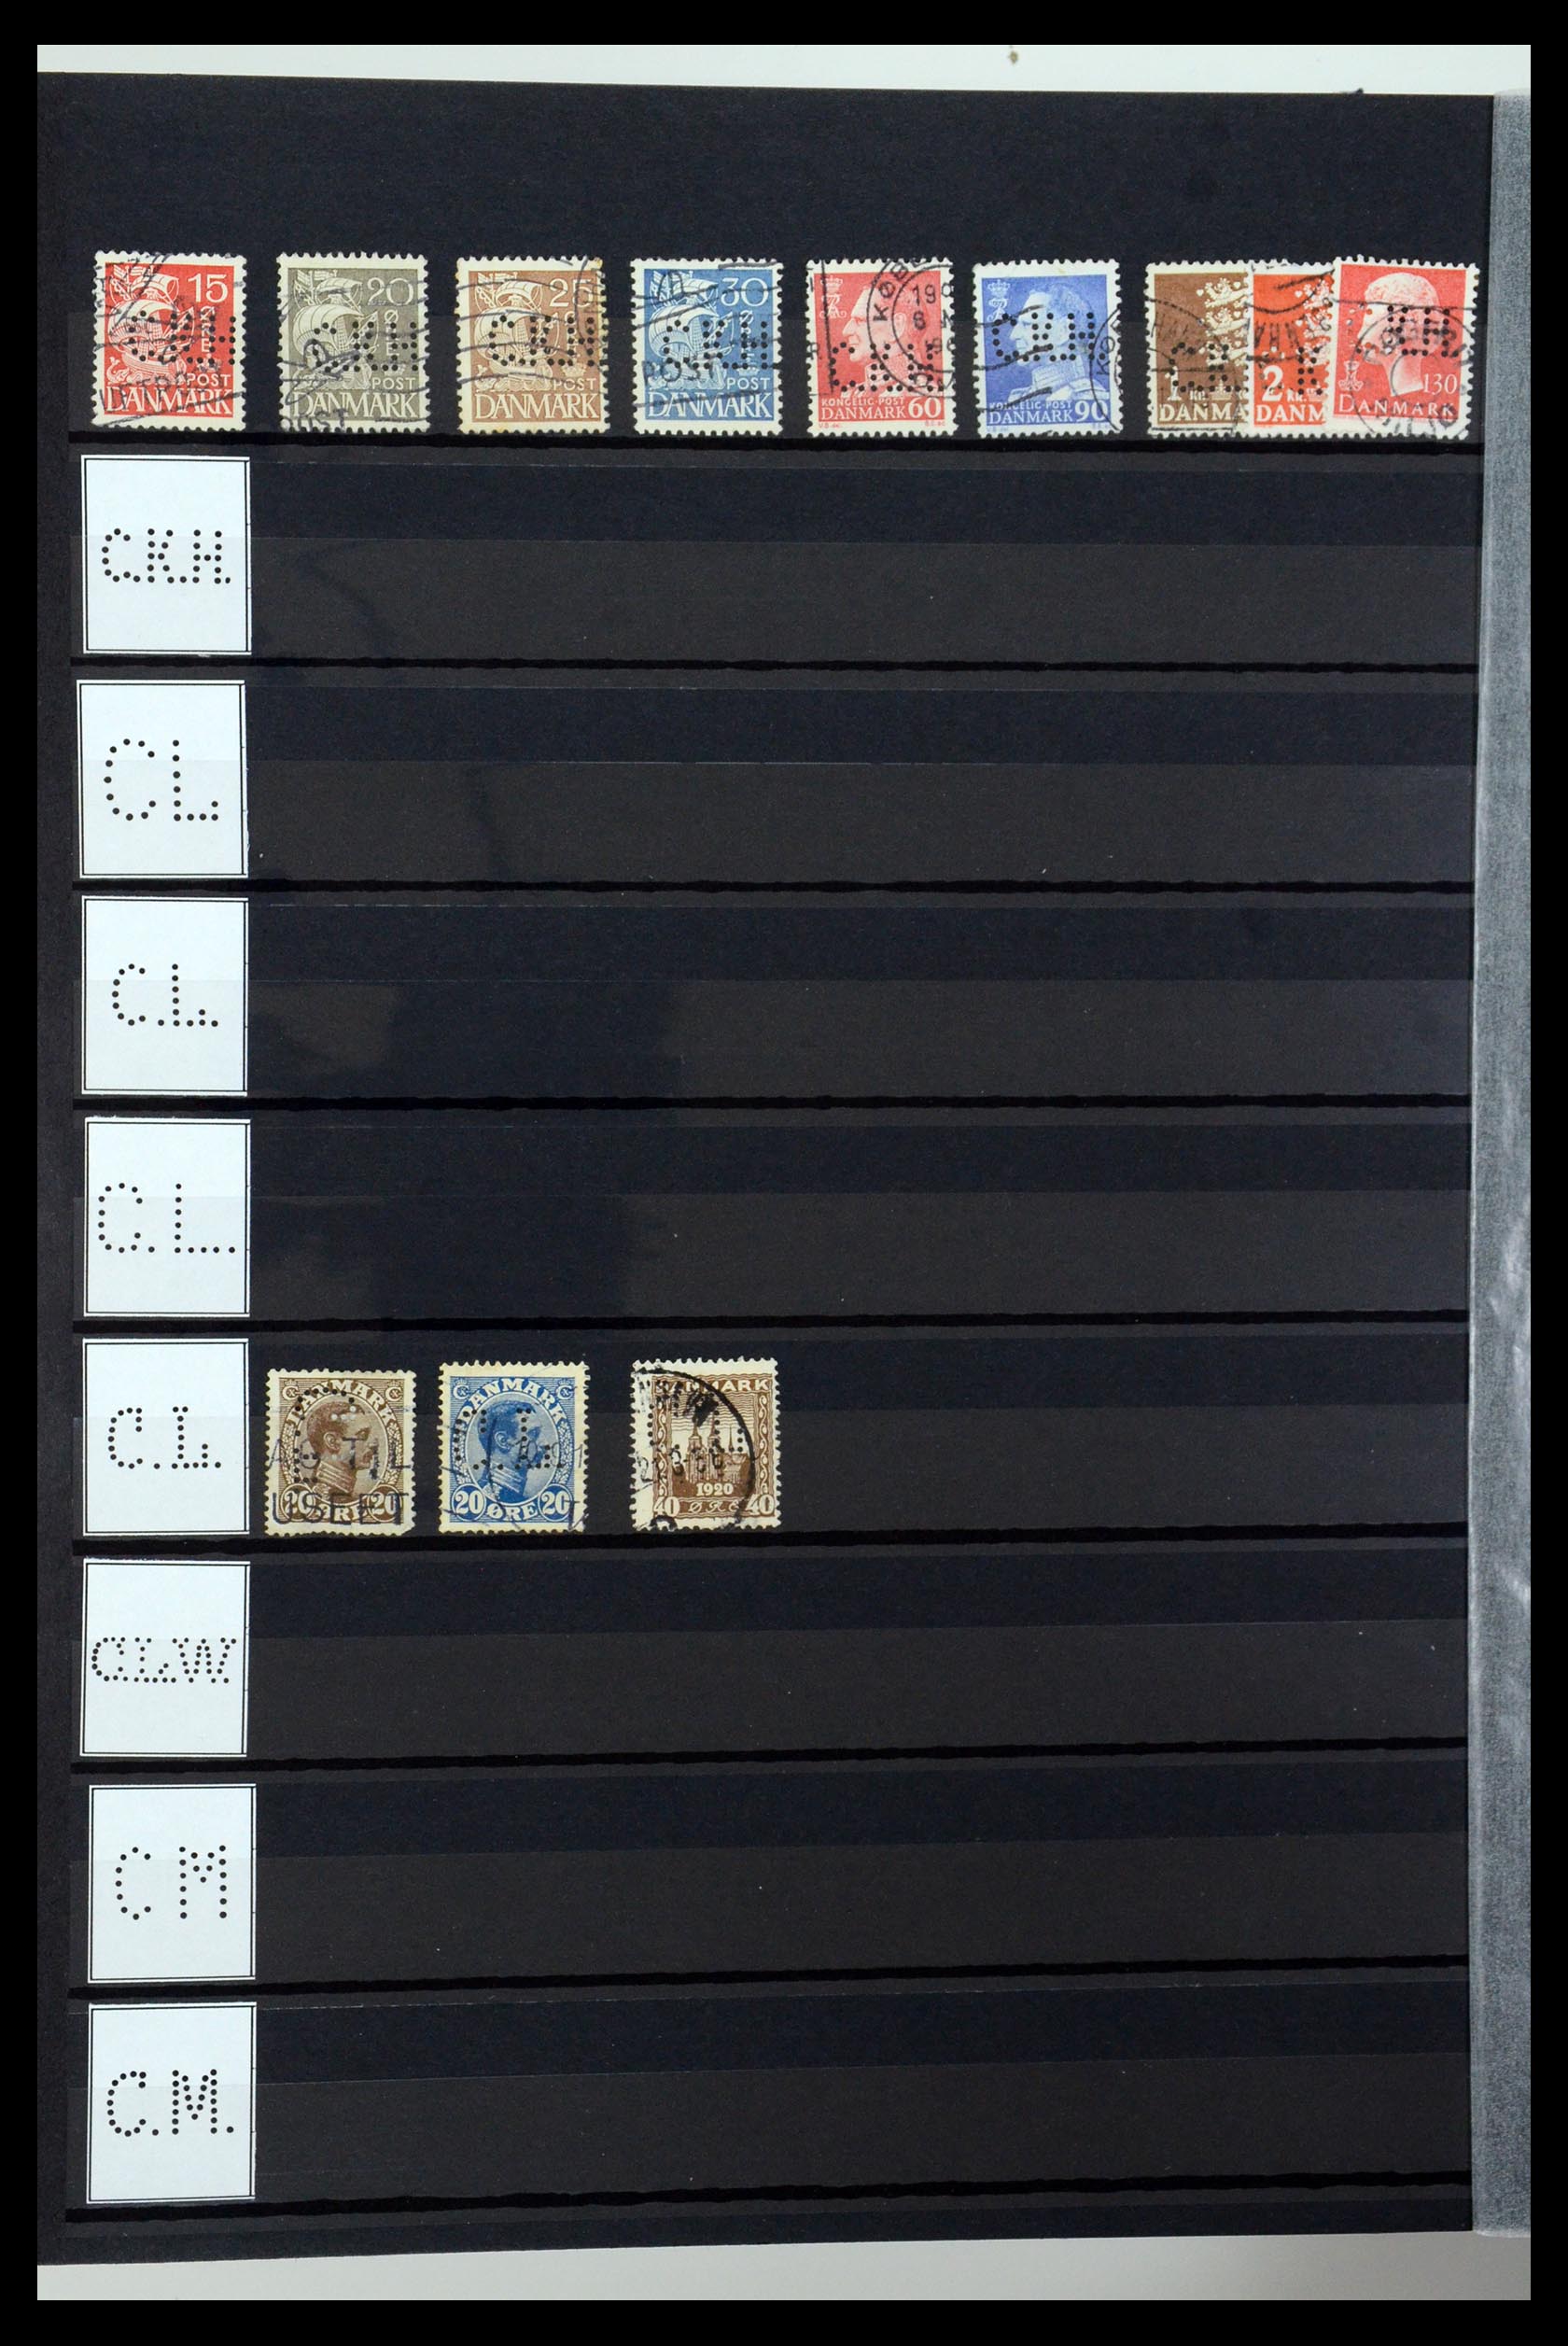 36396 028 - Stamp collection 36396 Denmark perfins.